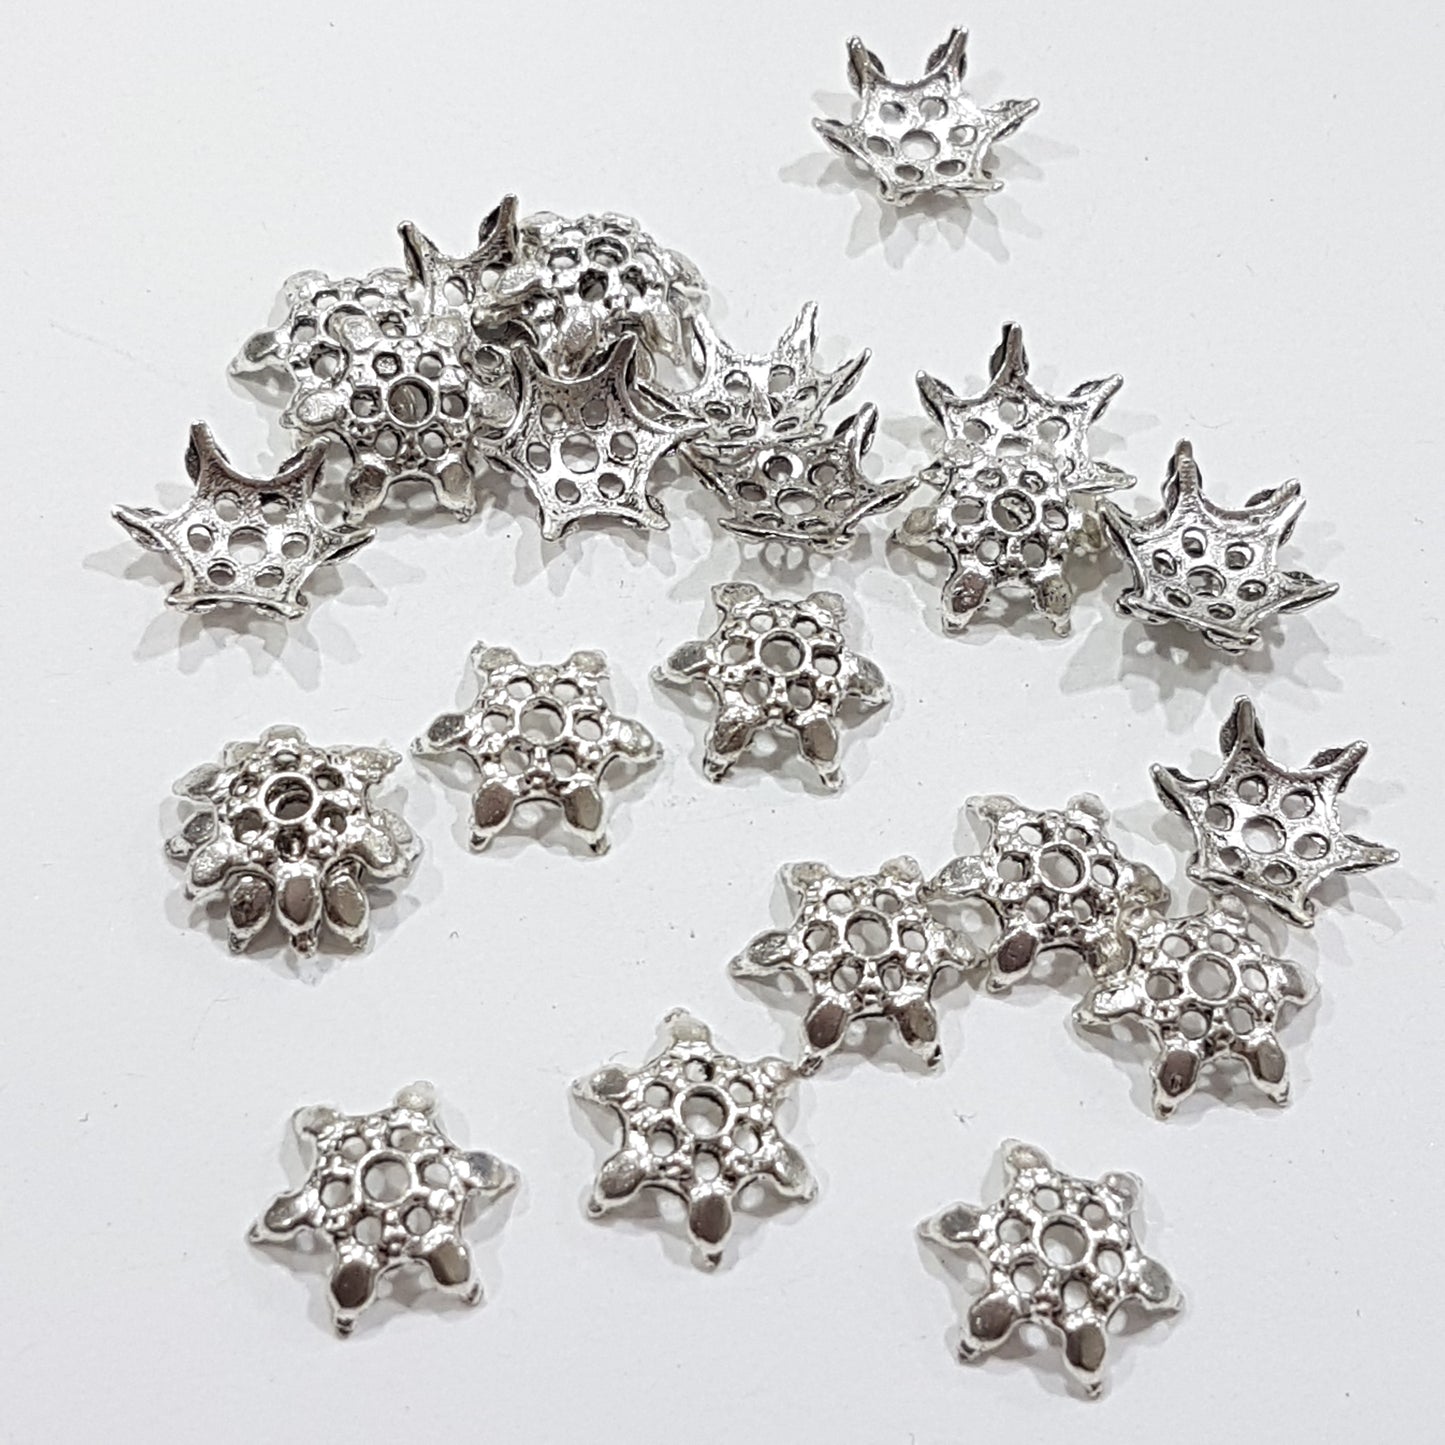 25pc Tibetan Silver Bead Caps